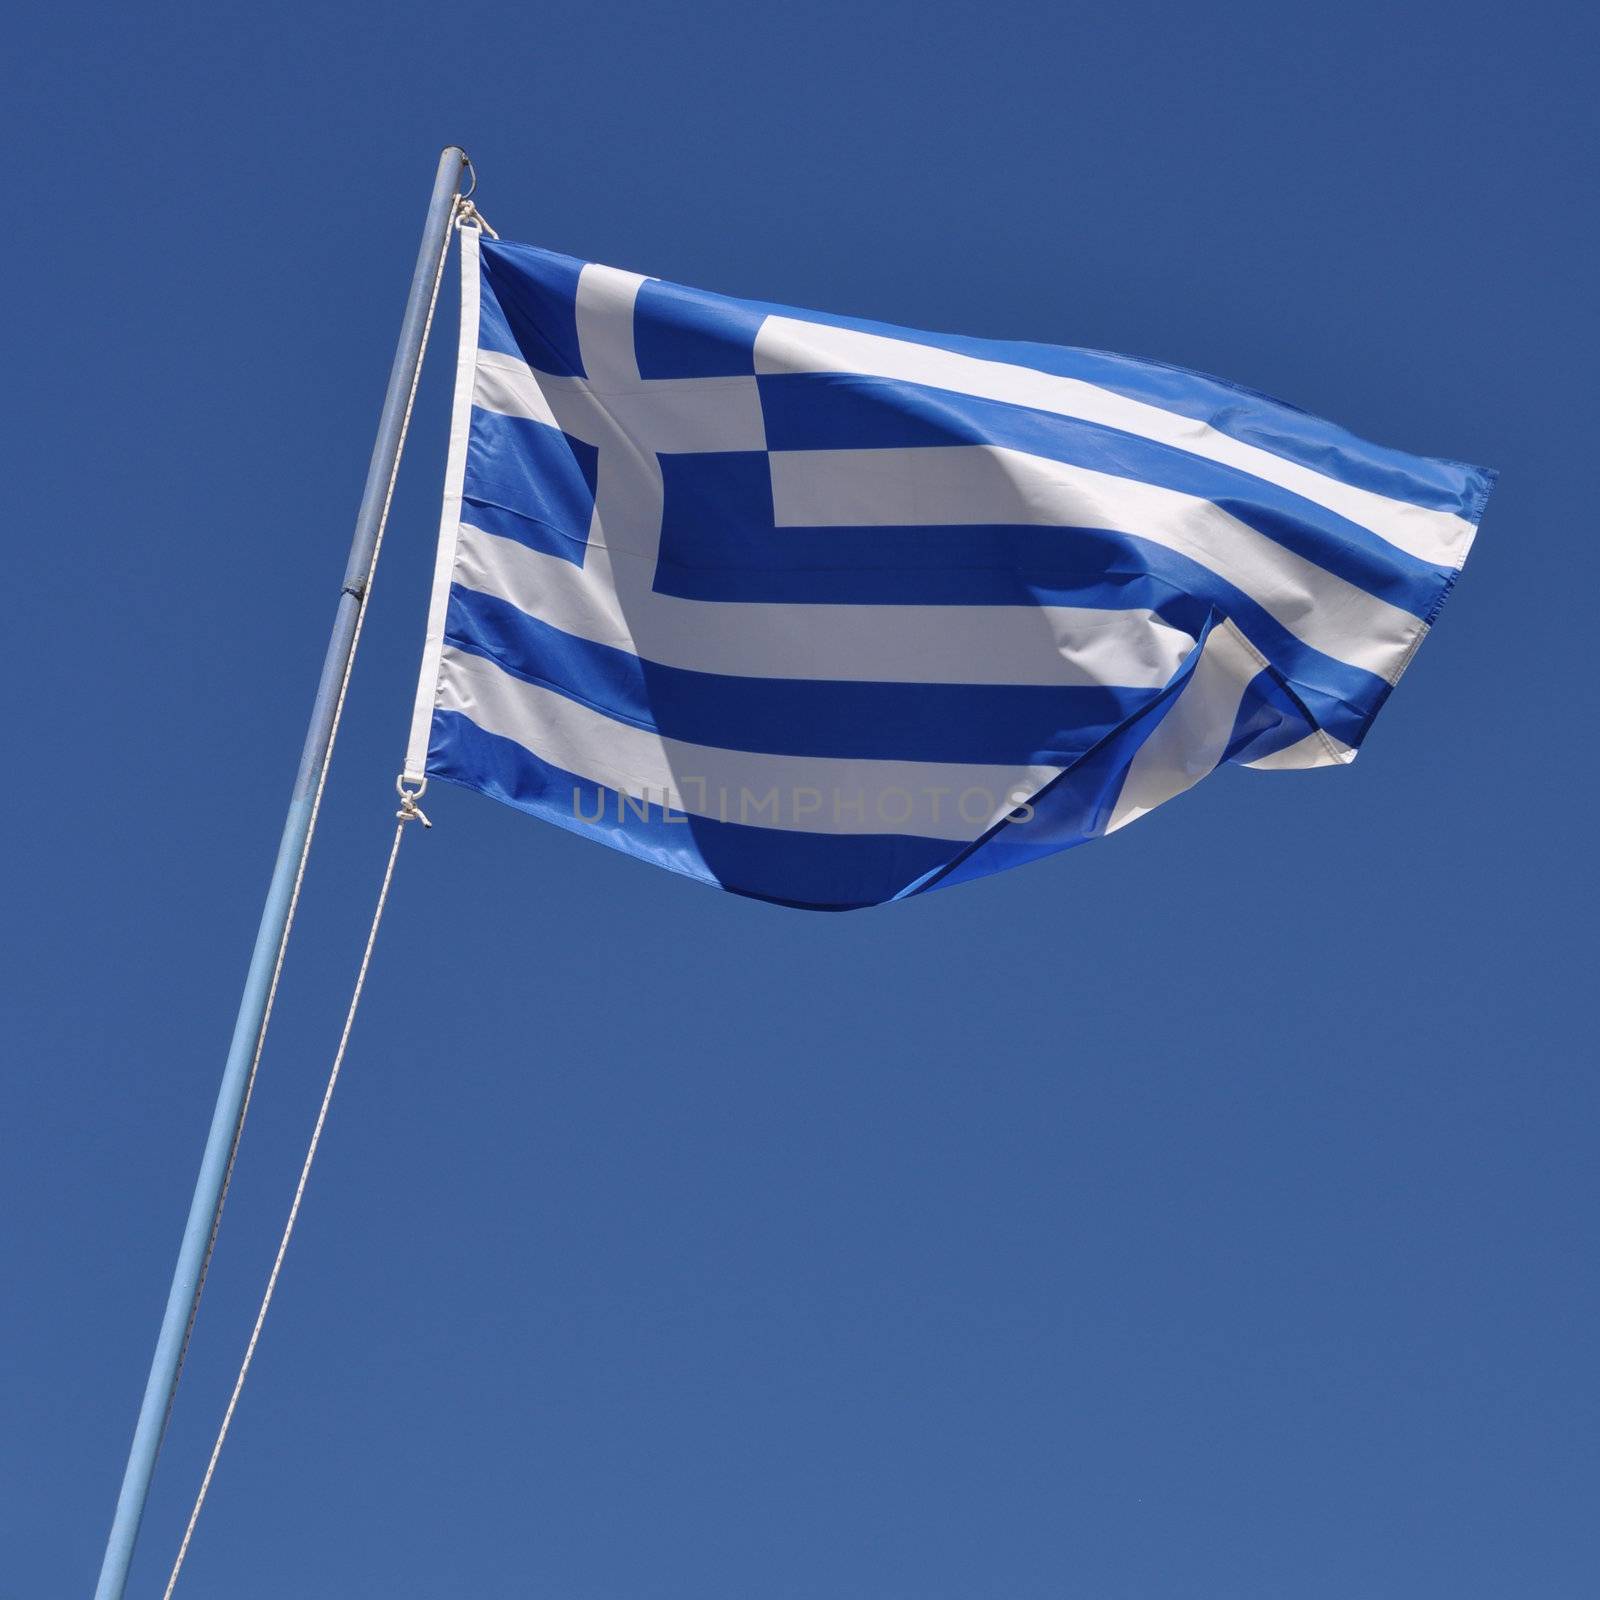 vibrant greek flag on a blue pole against a blue sky background